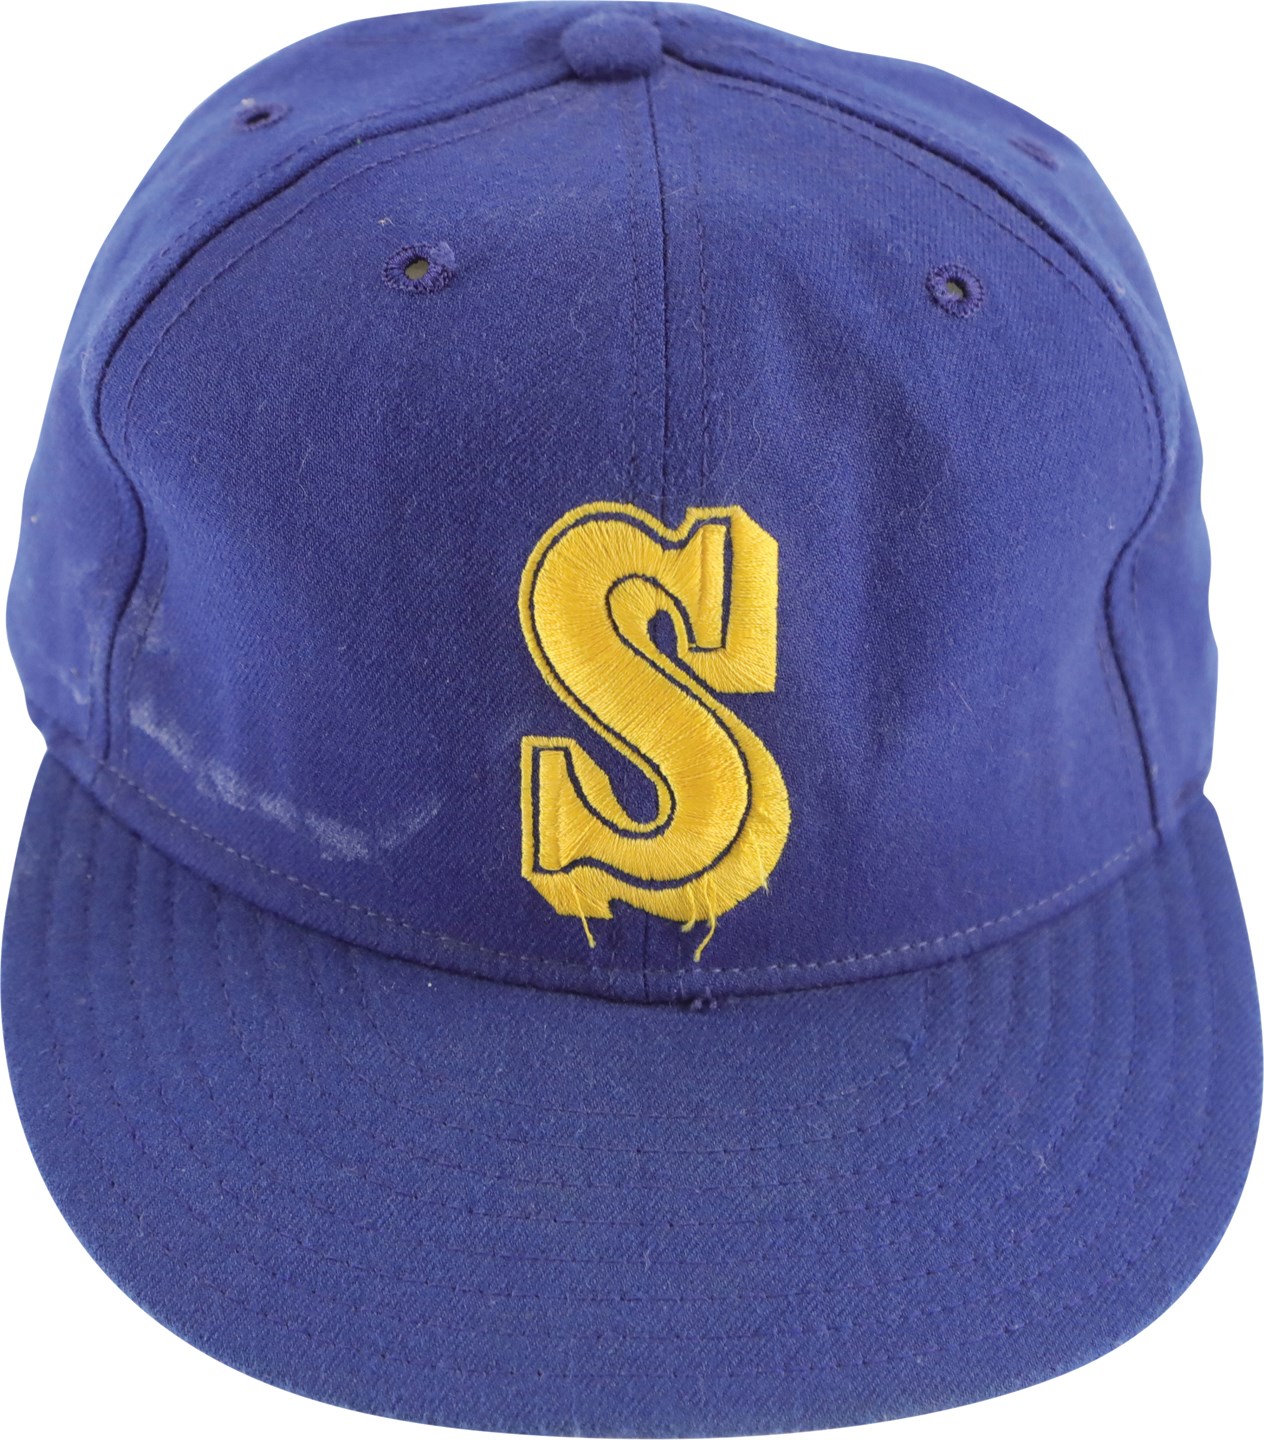 Baseball Equipment - 1989 Ken Griffey Jr. Seattle Mariners Rookie Signed Game Used Hat (Mill Creek COA & PSA)